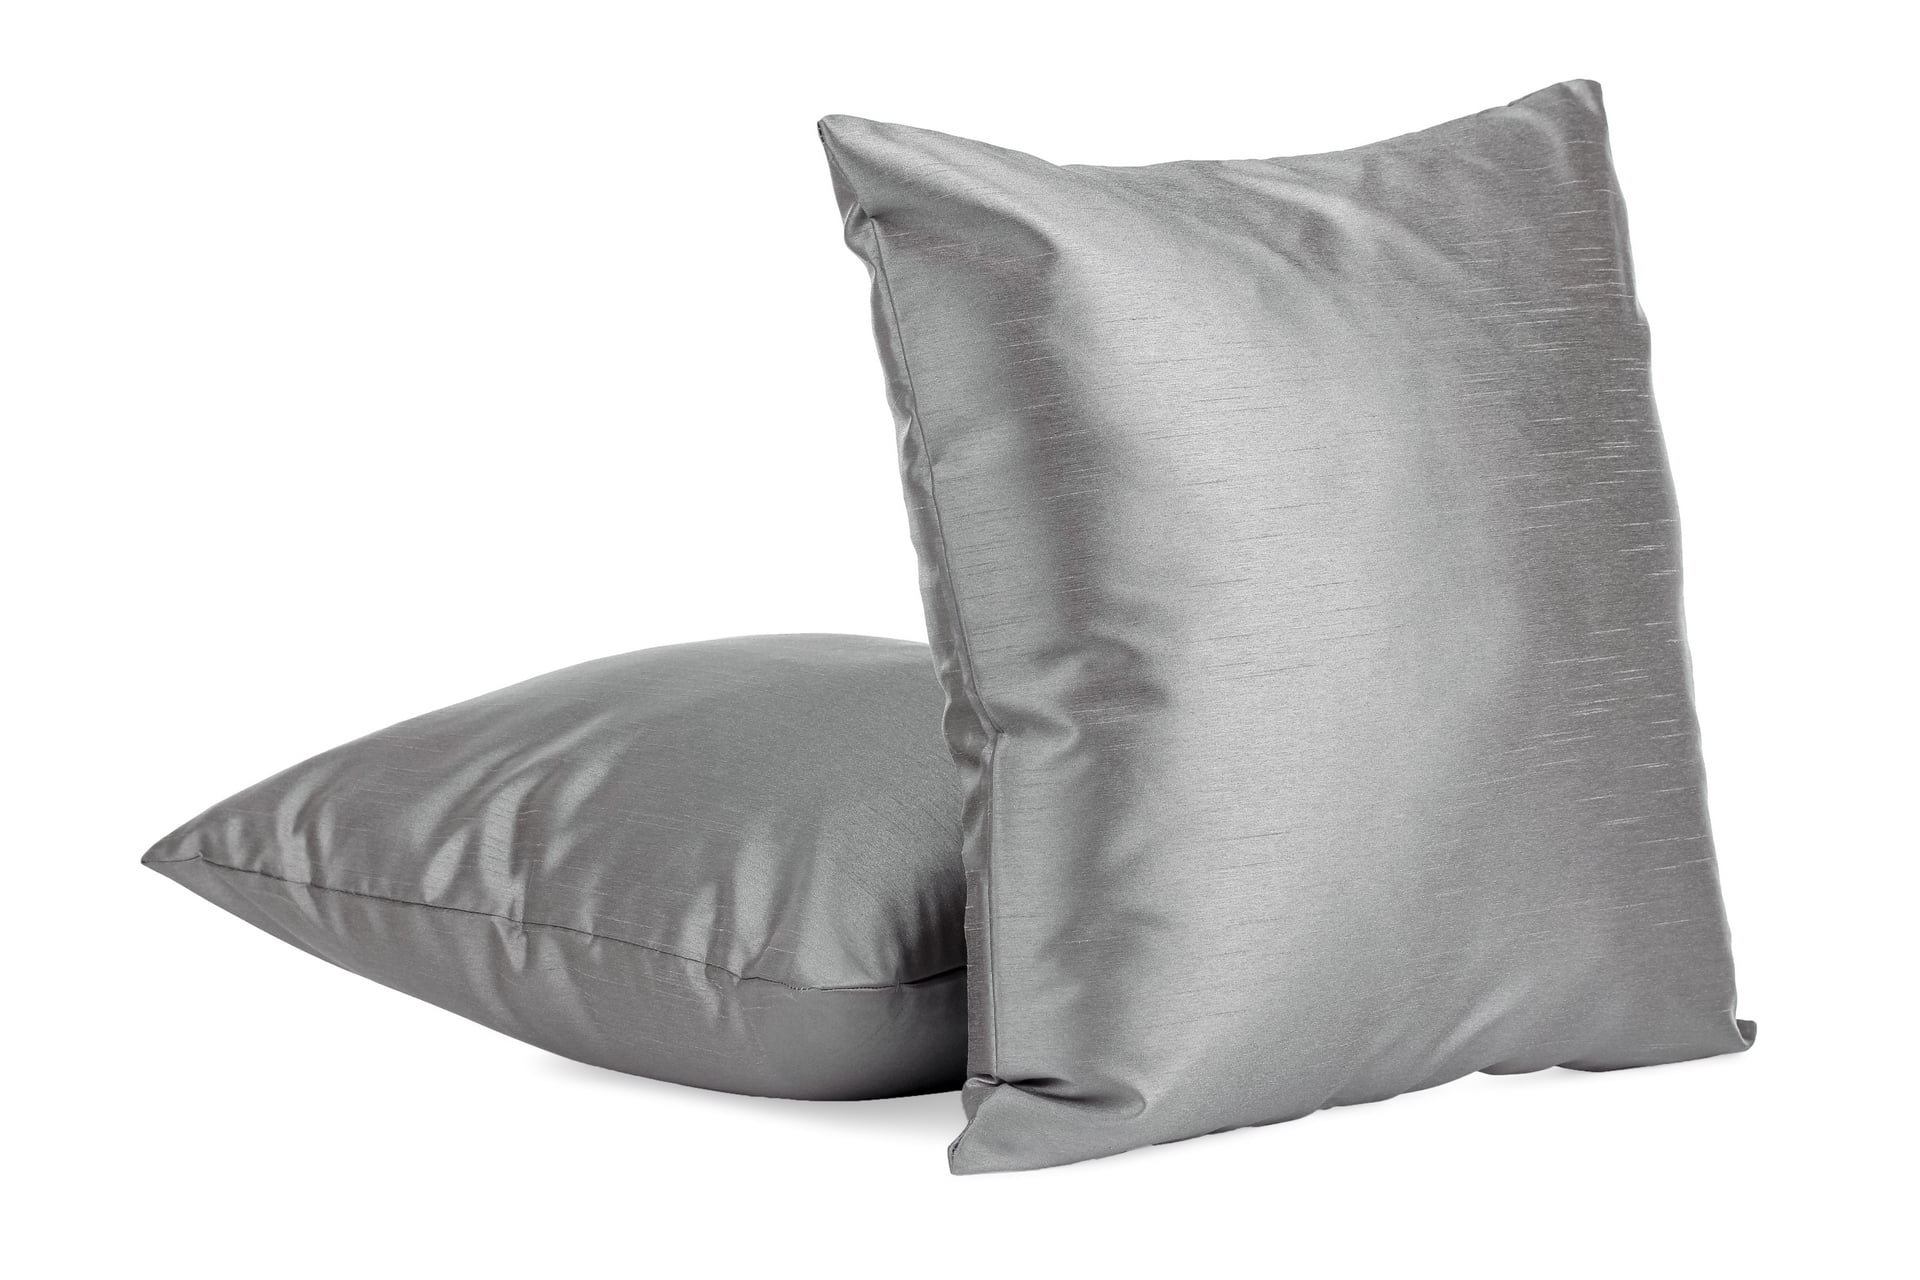 26x26 pillow covers walmart